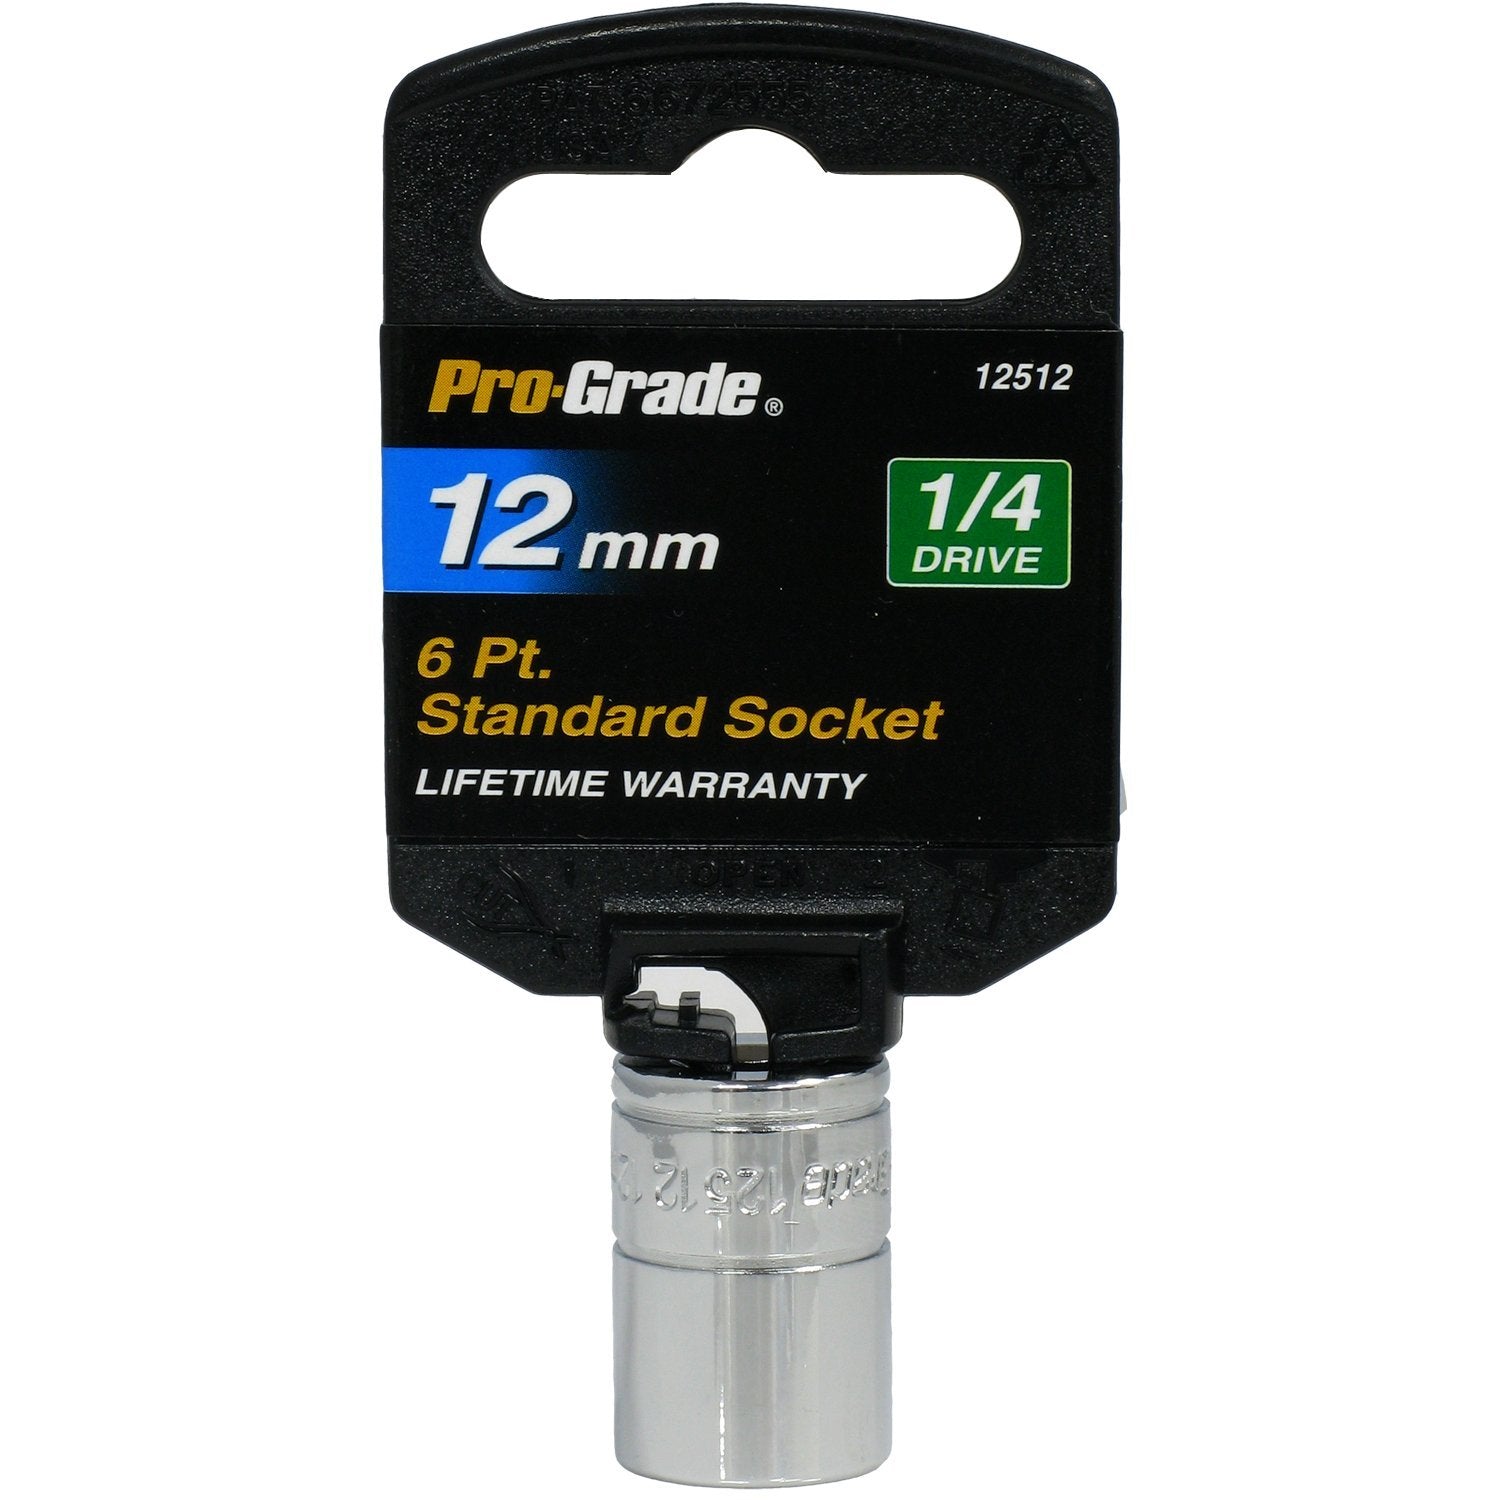 Pro-Grade 12mm 1/4" Drive Standard Socket 6 Point Chrome Vanadium Steel 12512